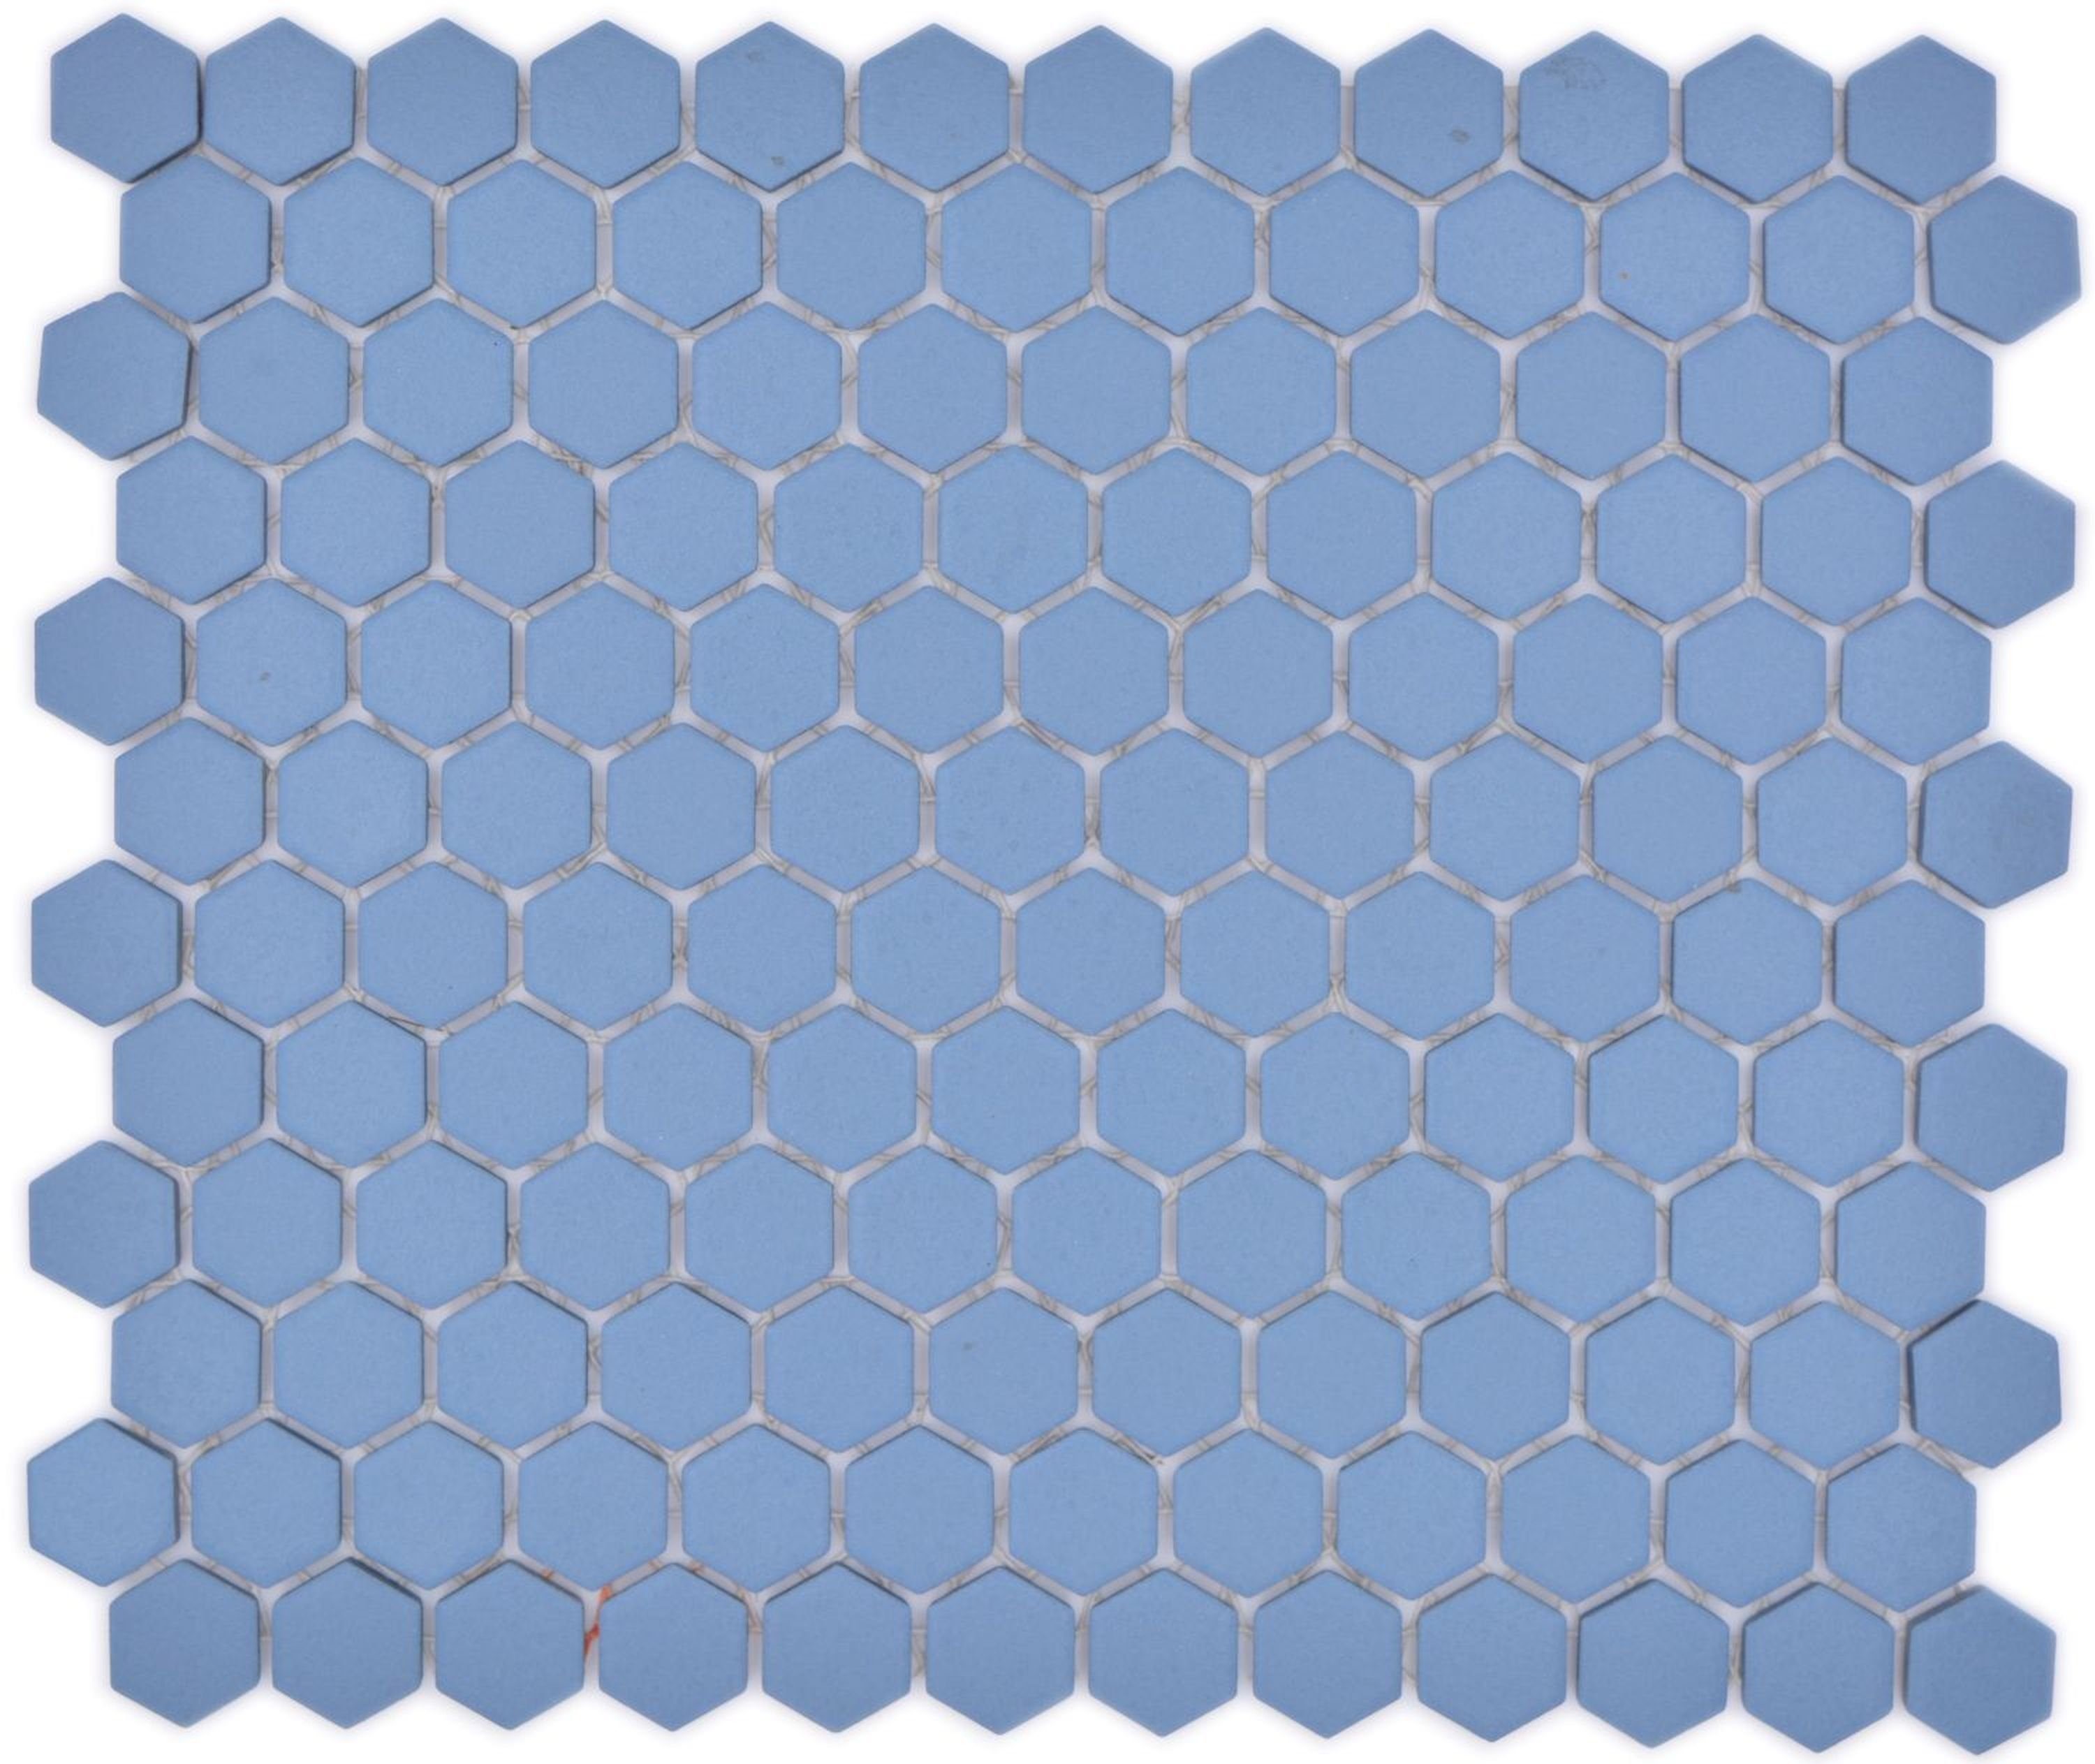 Mosani Mosaikfliesen Keramikmosaik Mosaikfliesen blaugrün matt / 10 Mosaikmatten